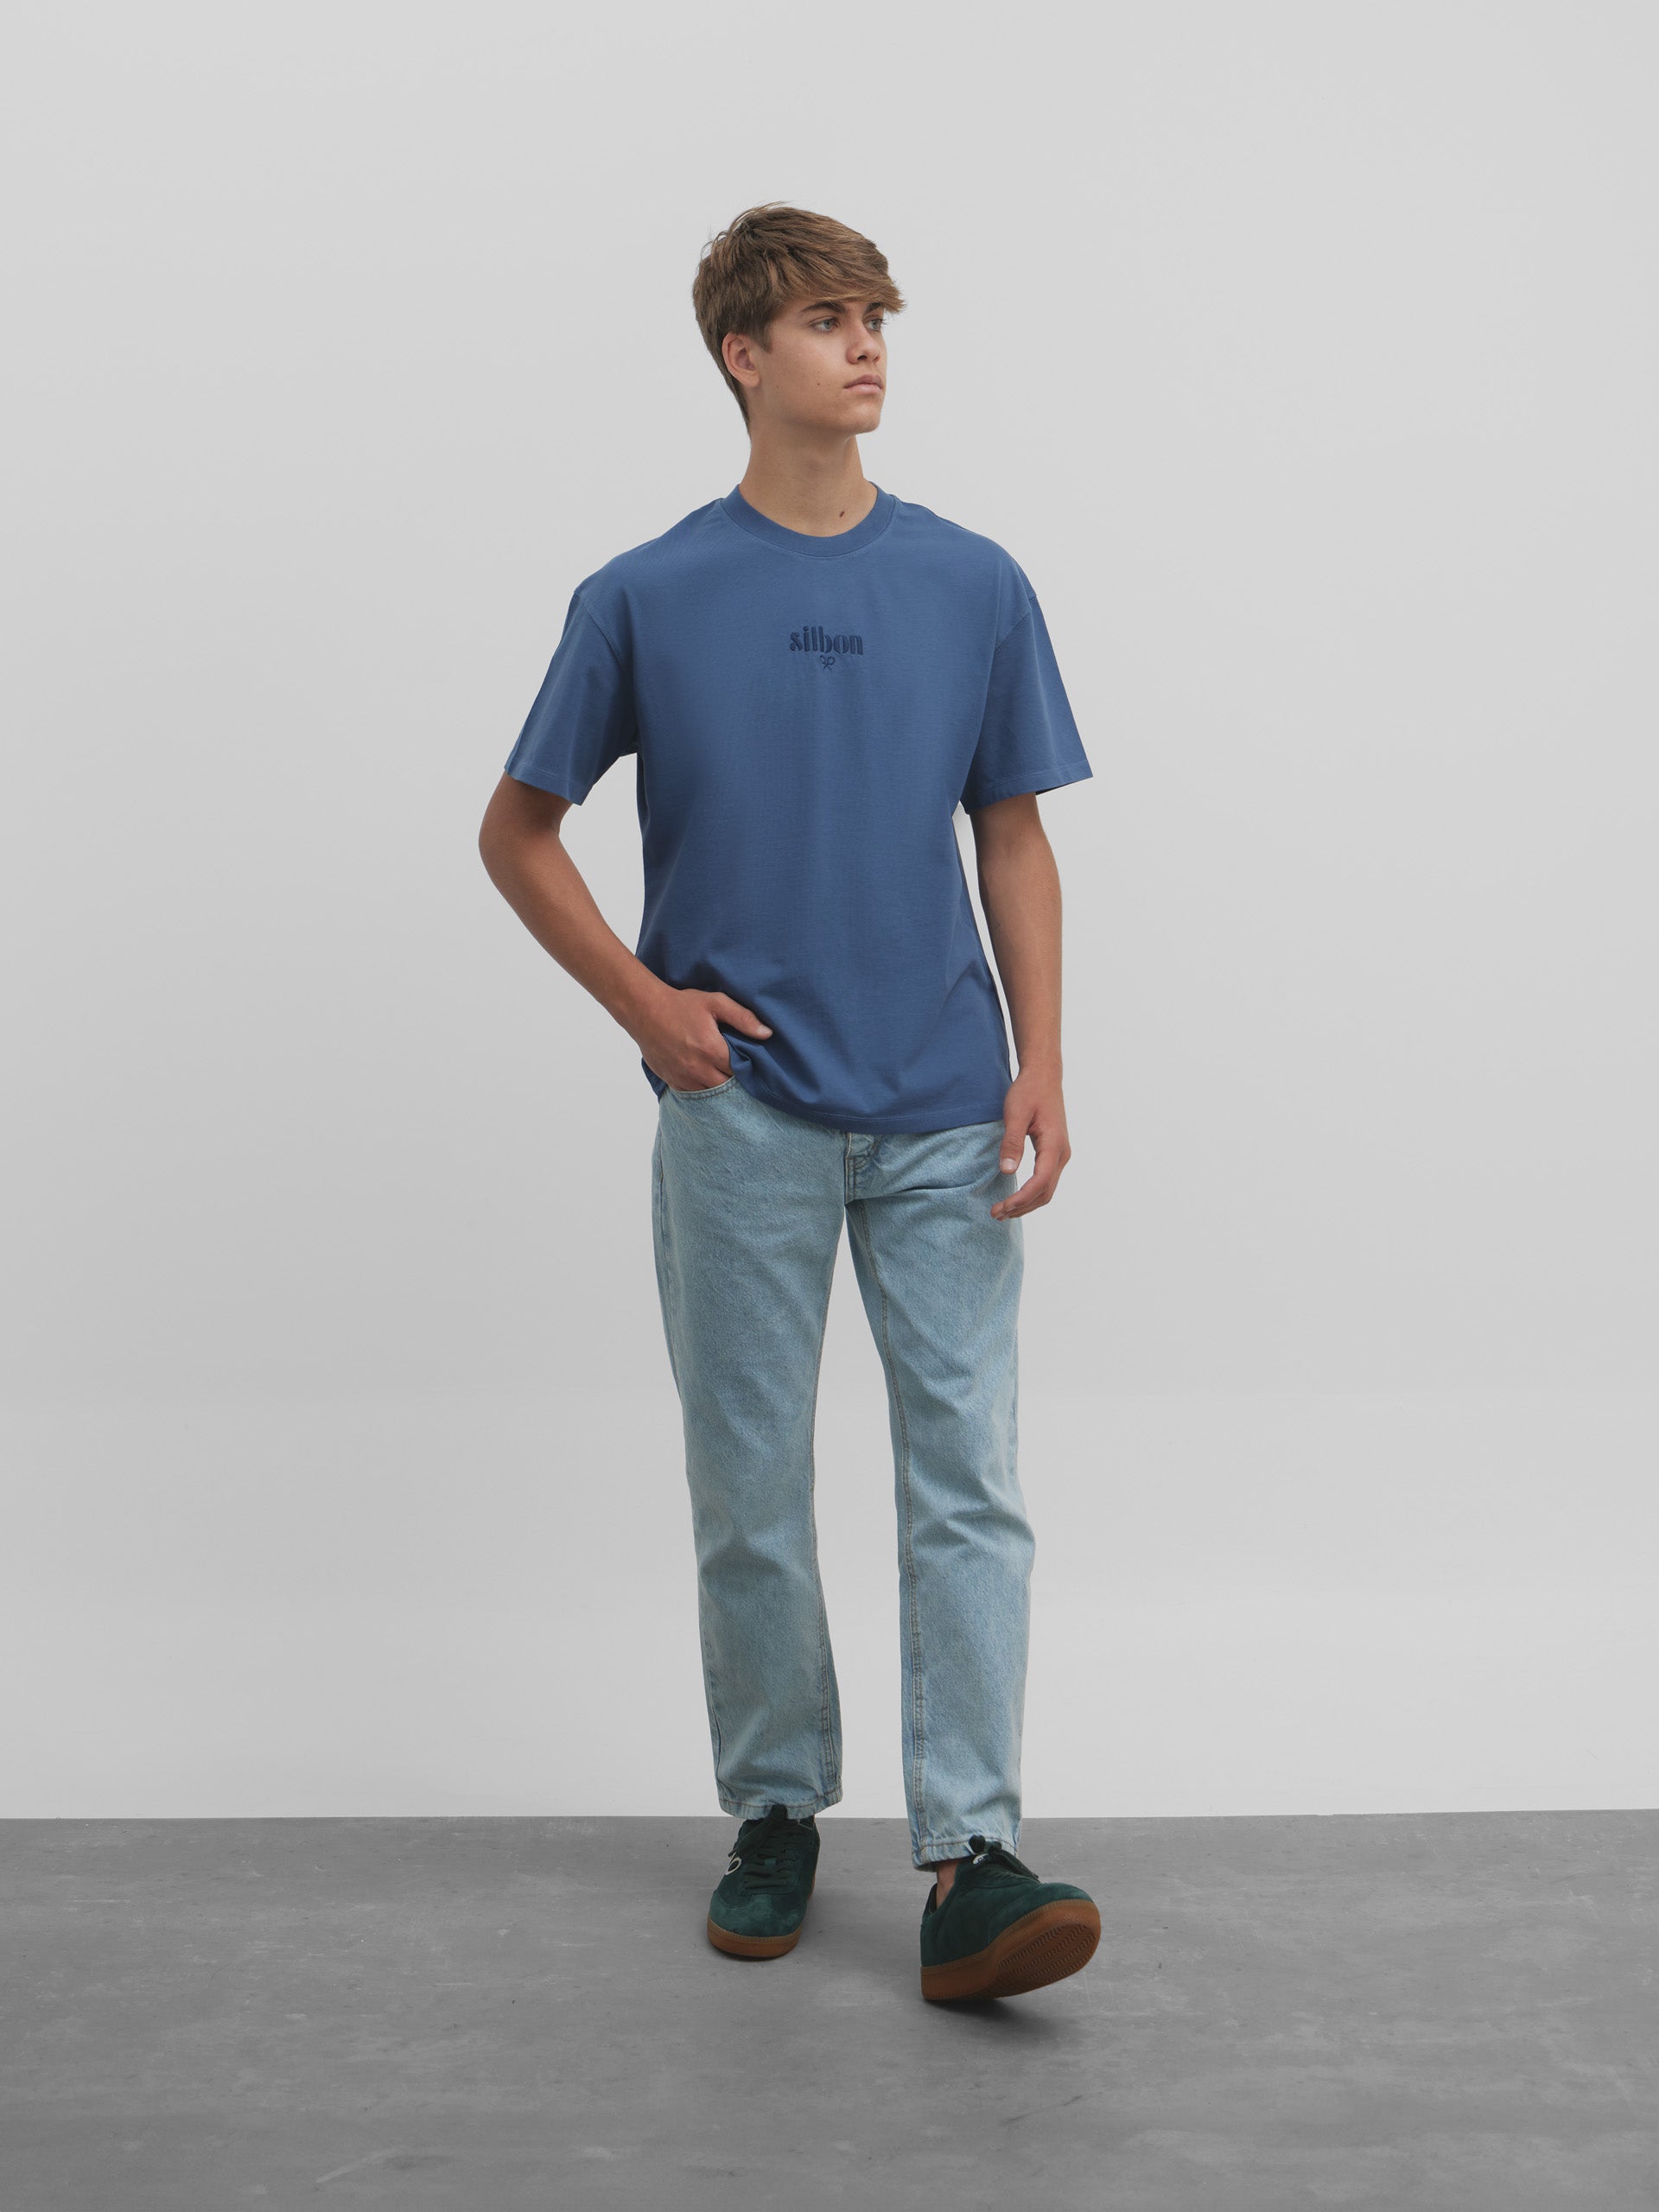 Silbon special fit blue t-shirt